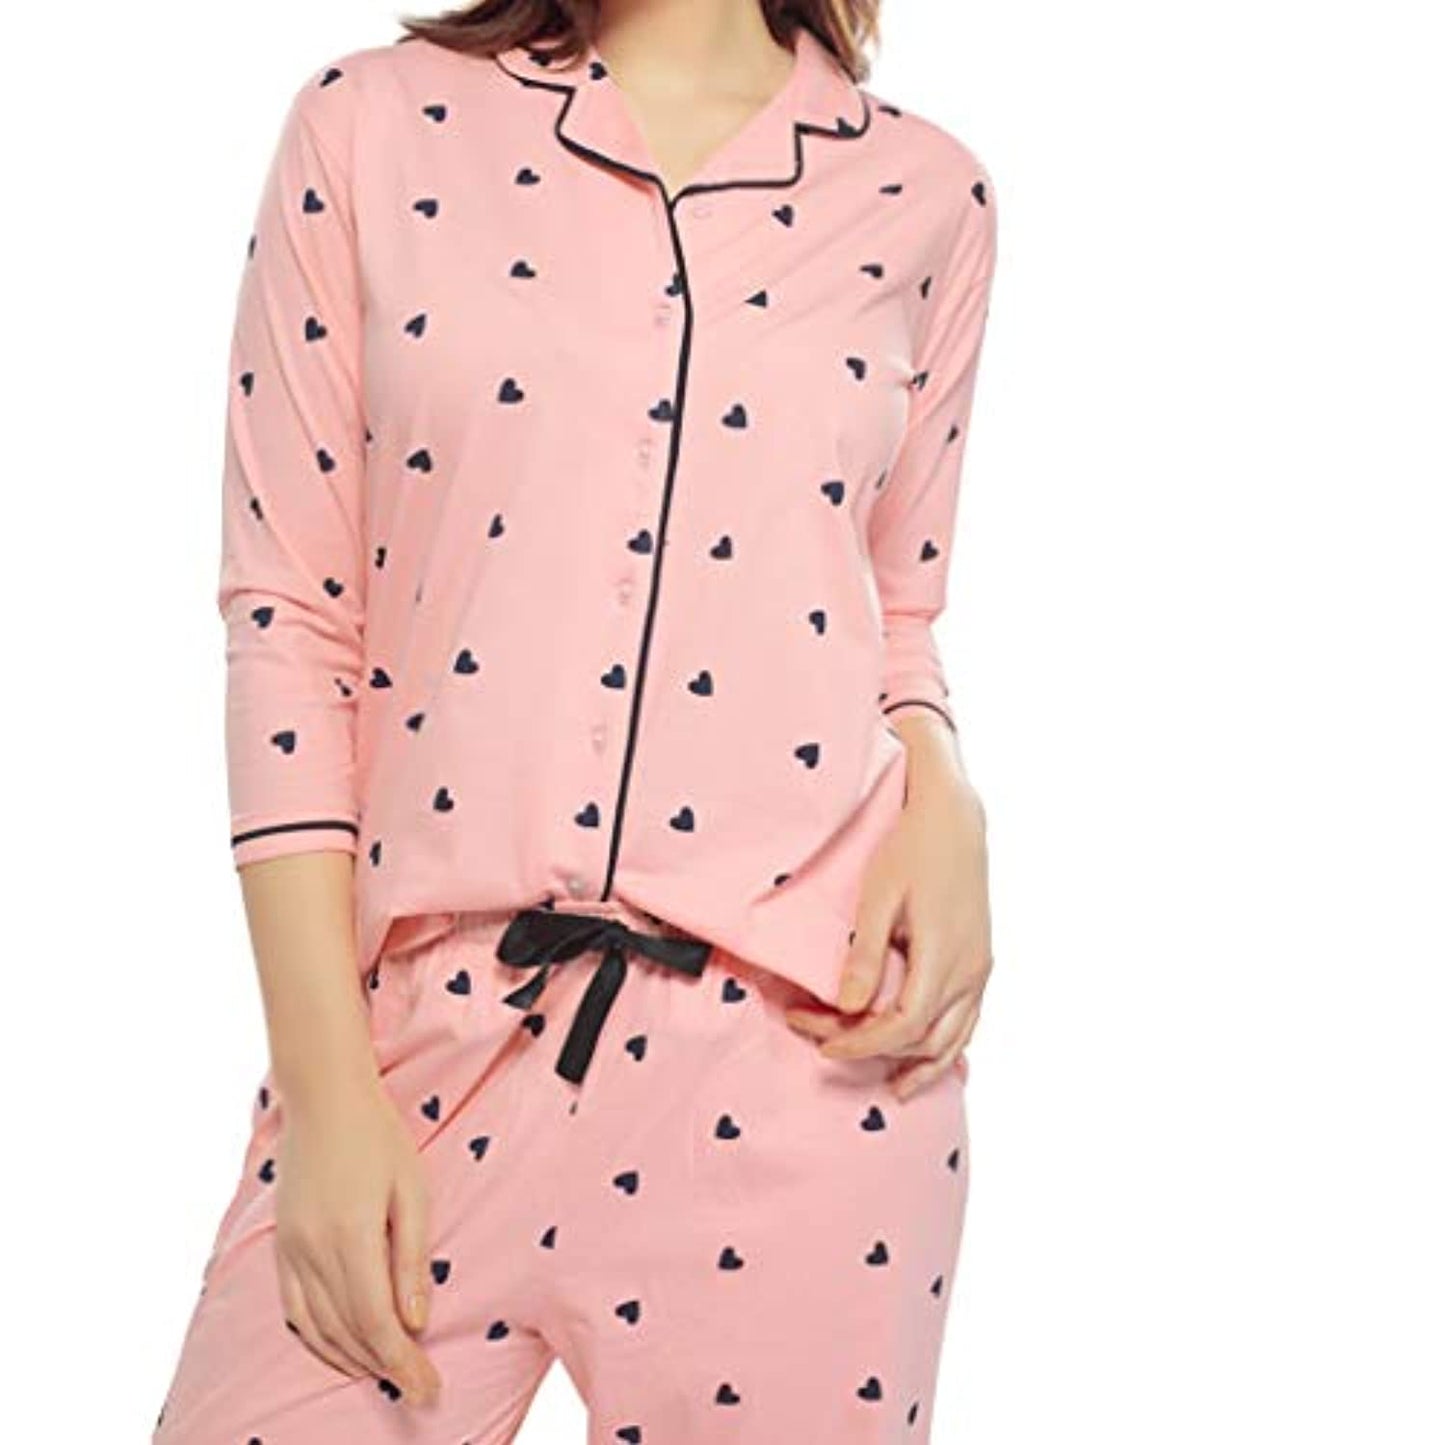 Three Fourth Sleeve Notched Collar Pink Heart Print Night Suit Sleepwear